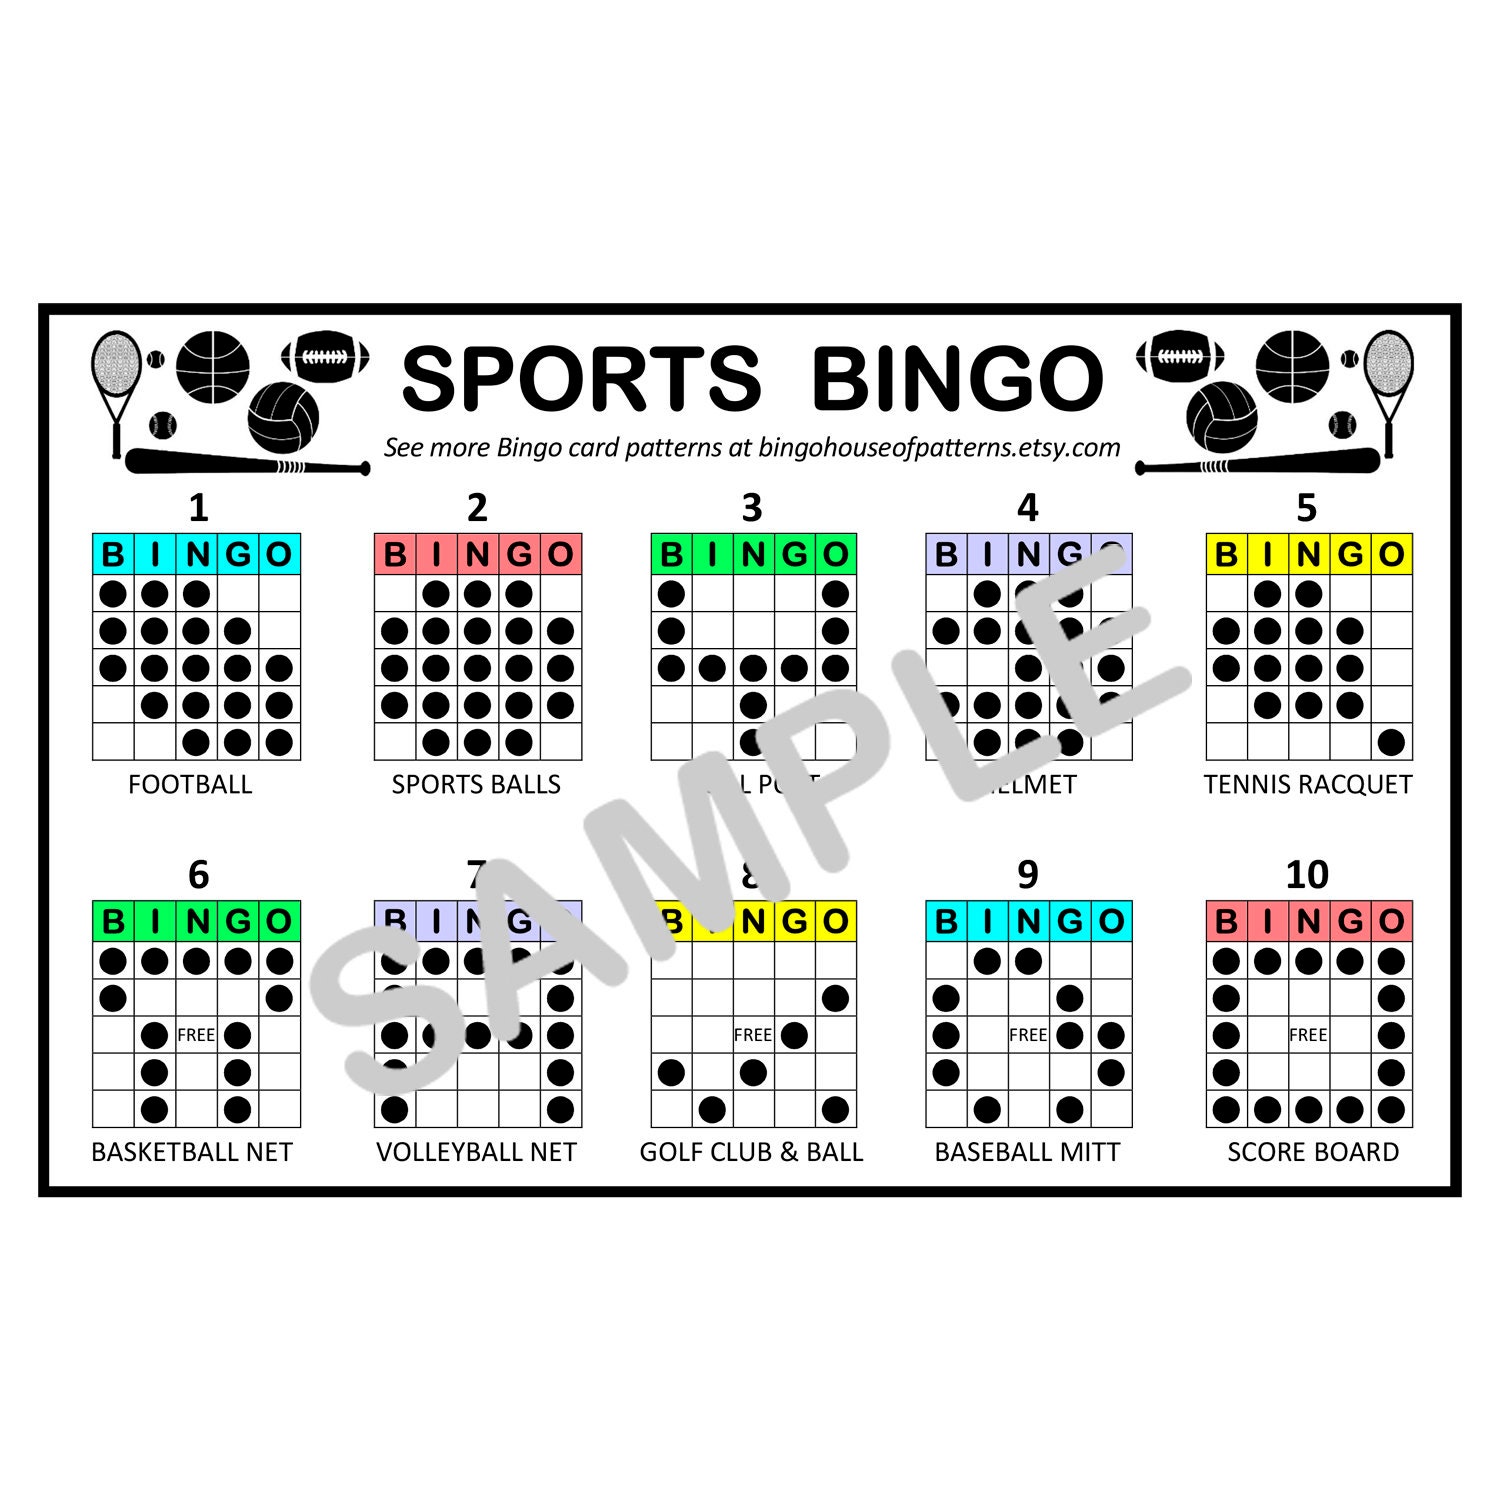 bingo-card-patterns